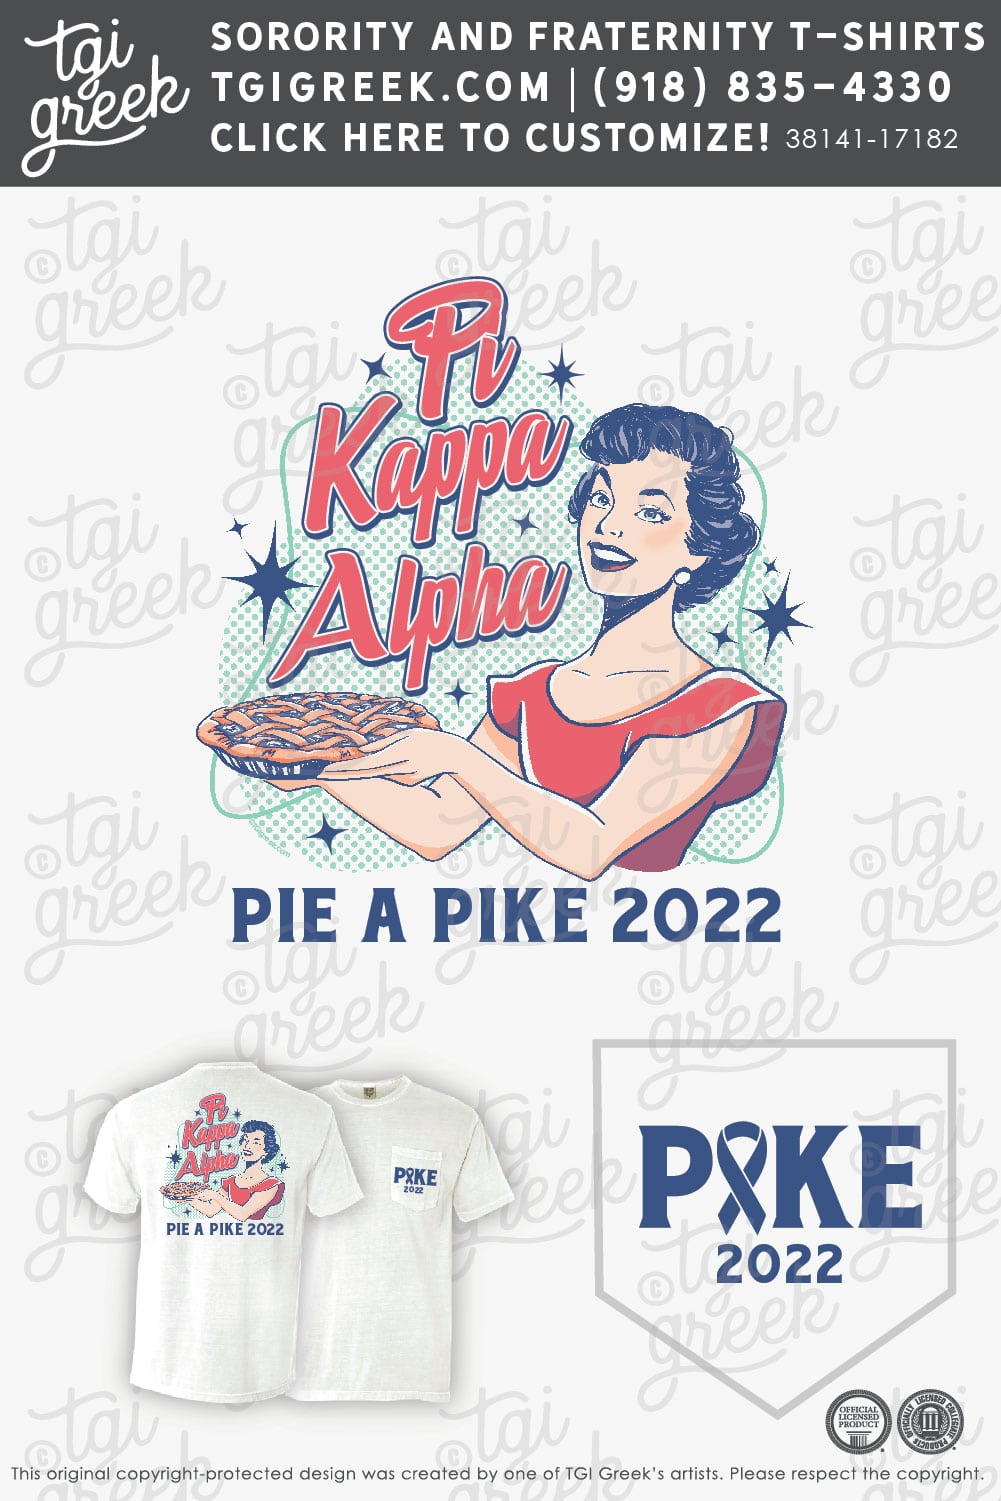 Pi Kappa Alpha - USCAR Pie A Pike - TGI Greek